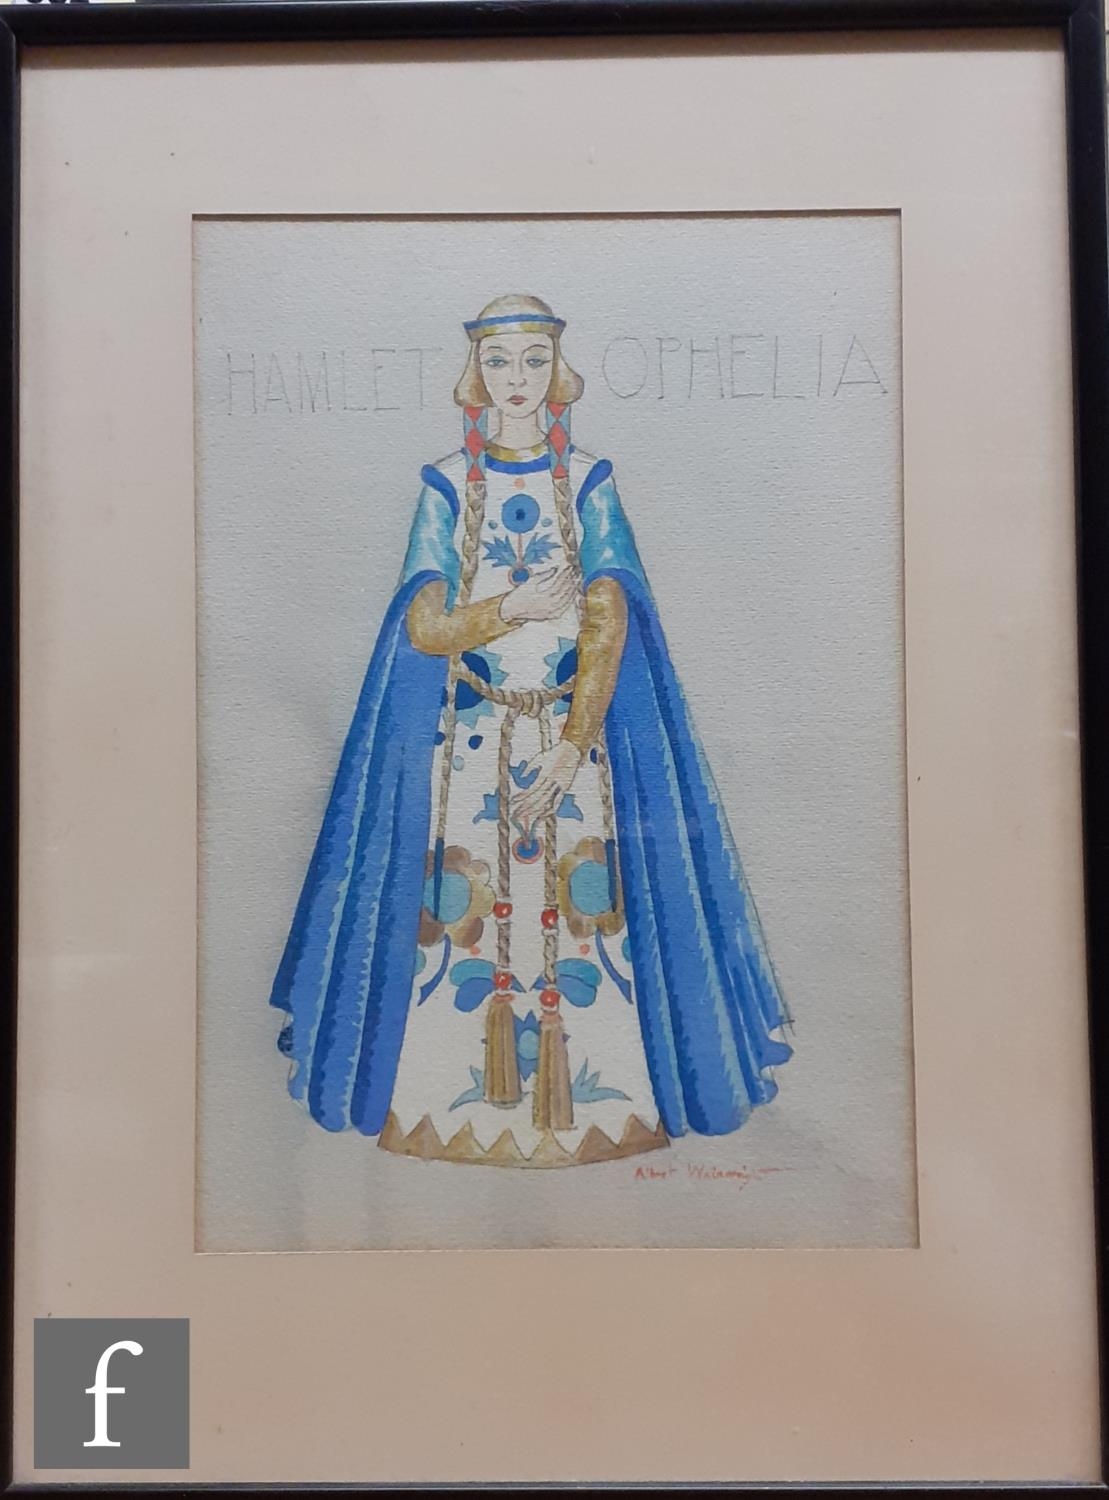 Albert Wainwright (1898-1943) - 'Hamlet - Ophelia', a costume design, watercolour, signed, framed,